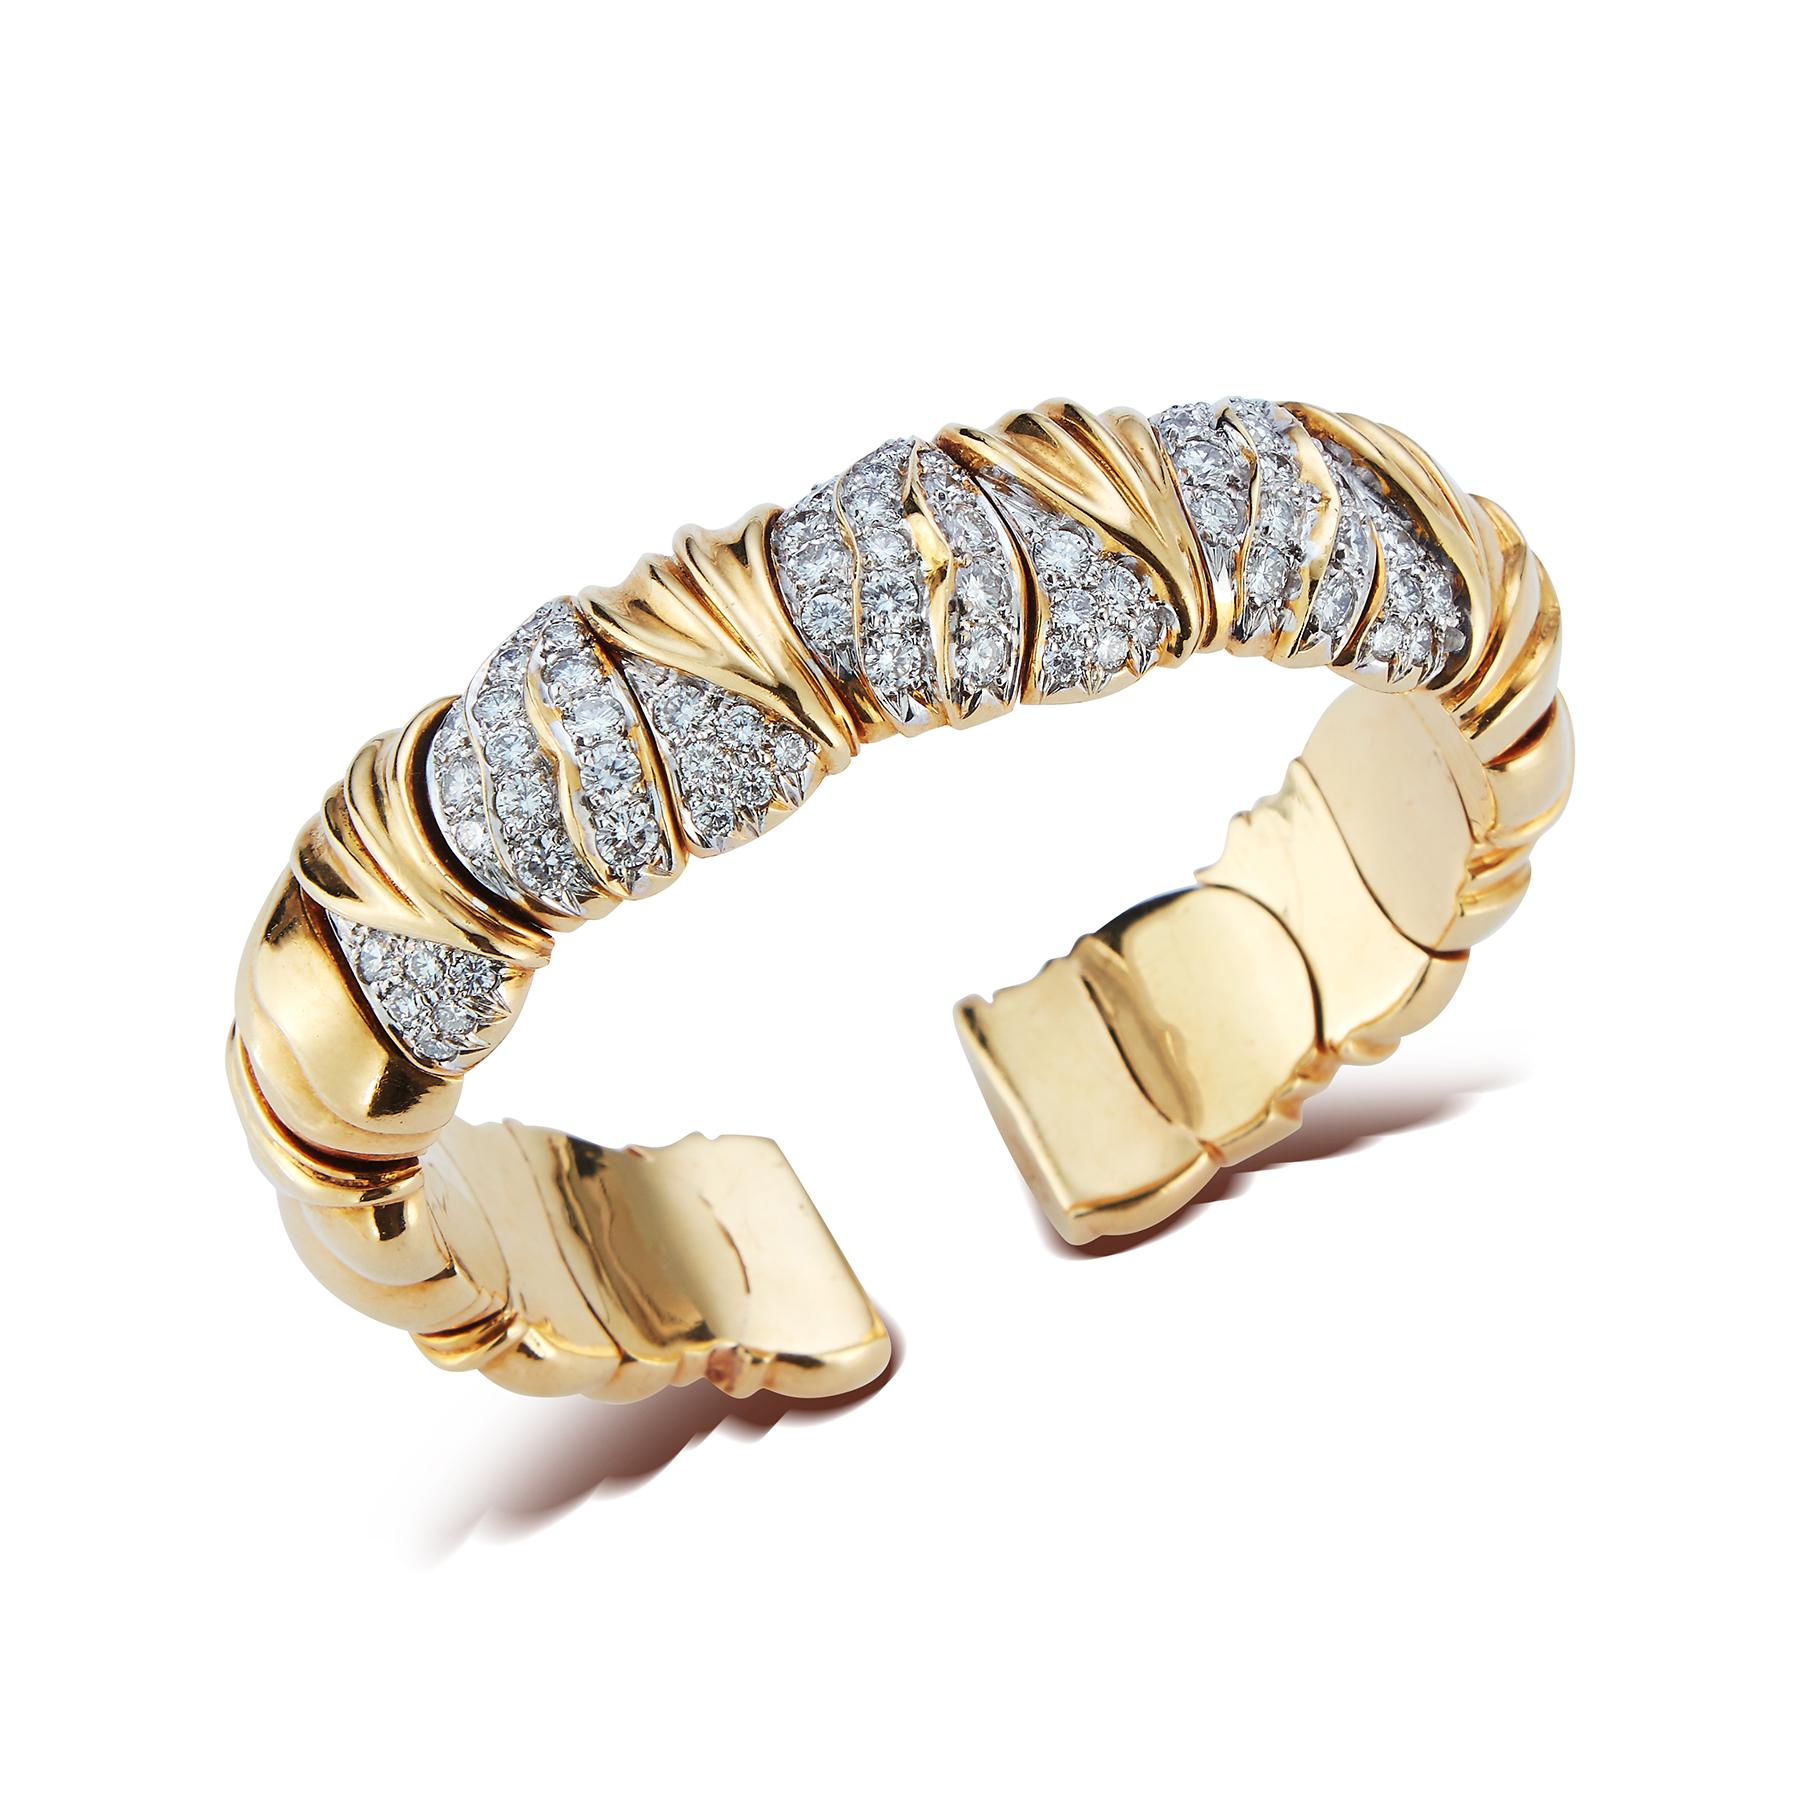 Gold & Diamond Bangle Bracelet 

Made by Elan, Circa 1980s

72 Round Cut Diamonds

Inner diameter: 2.25